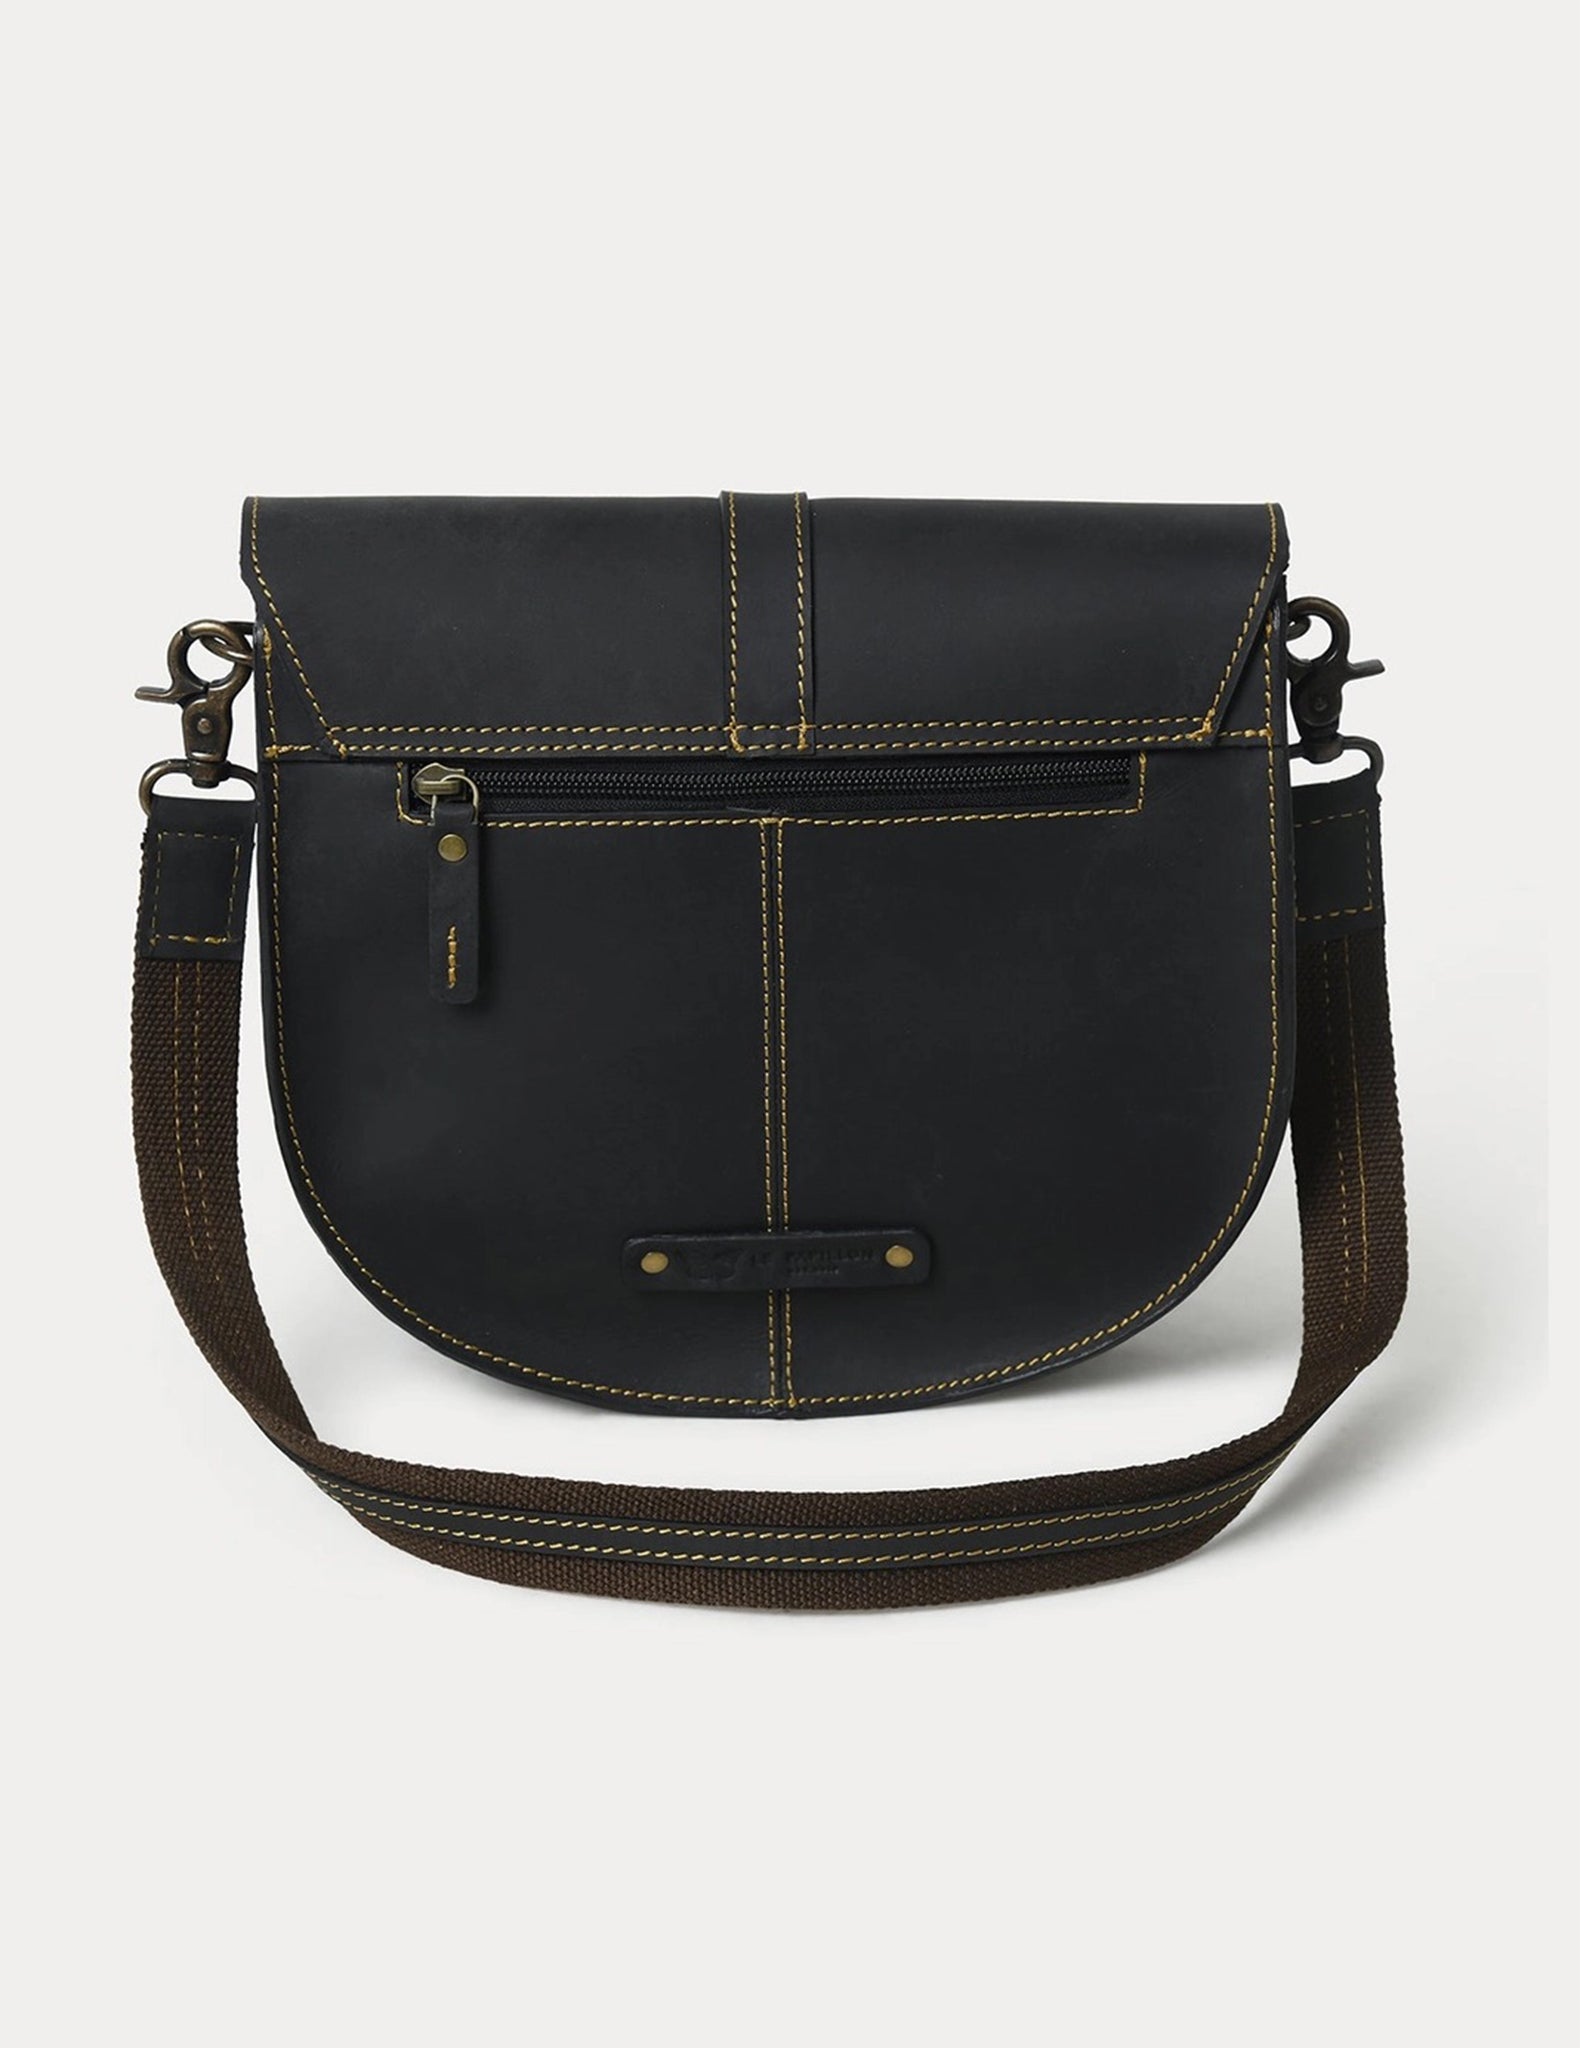 Eliaukly Women Saddle Bag Purse Shoulder Bag Purse Handbag Crossbody Bag  with 2 Detachable Straps(Black) : Clothing, Shoes & Jewelry - Amazon.com